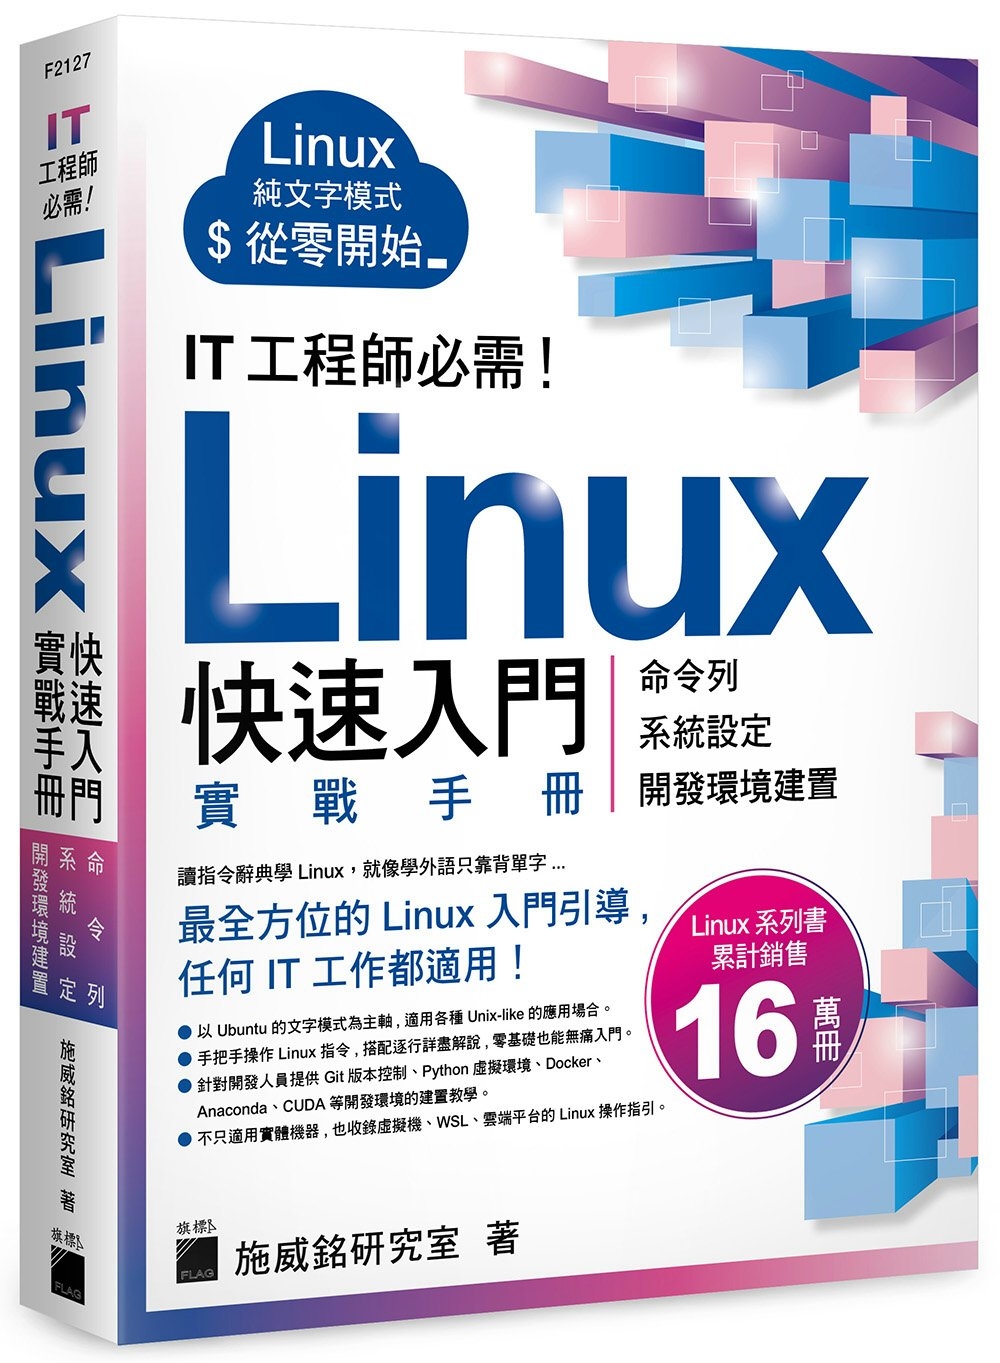 IT 工程師必需！Linux 快速入門實戰手冊 - 從命令列...